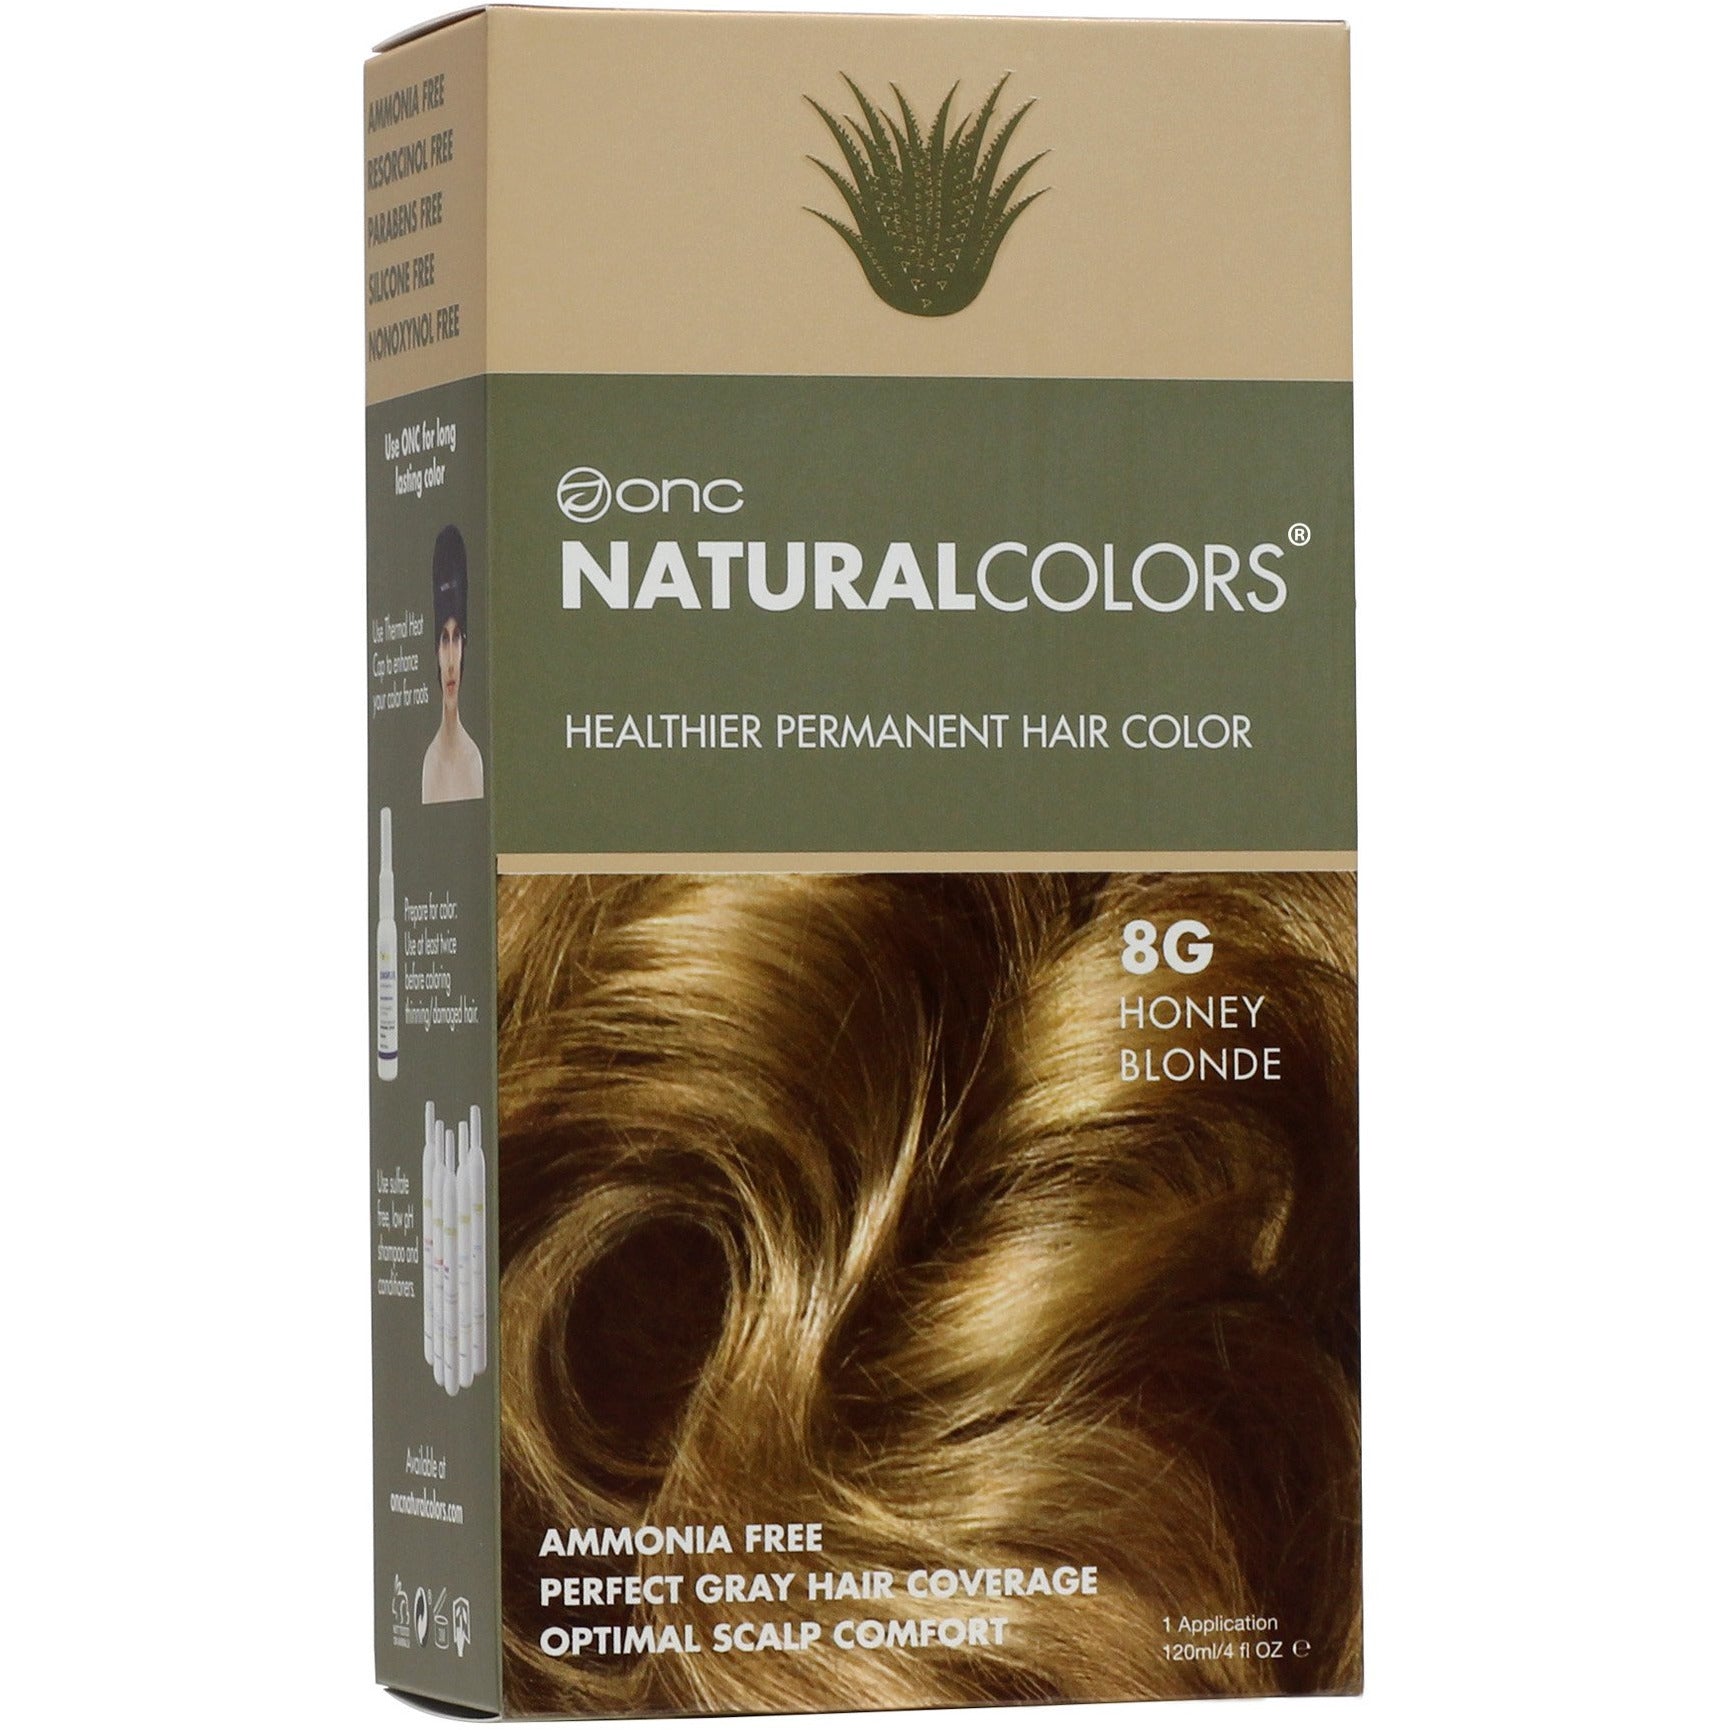 8G Honey Blonde Heat Activated Hair Dye With Organic Ingredients - 120 ml (4 fl. oz)